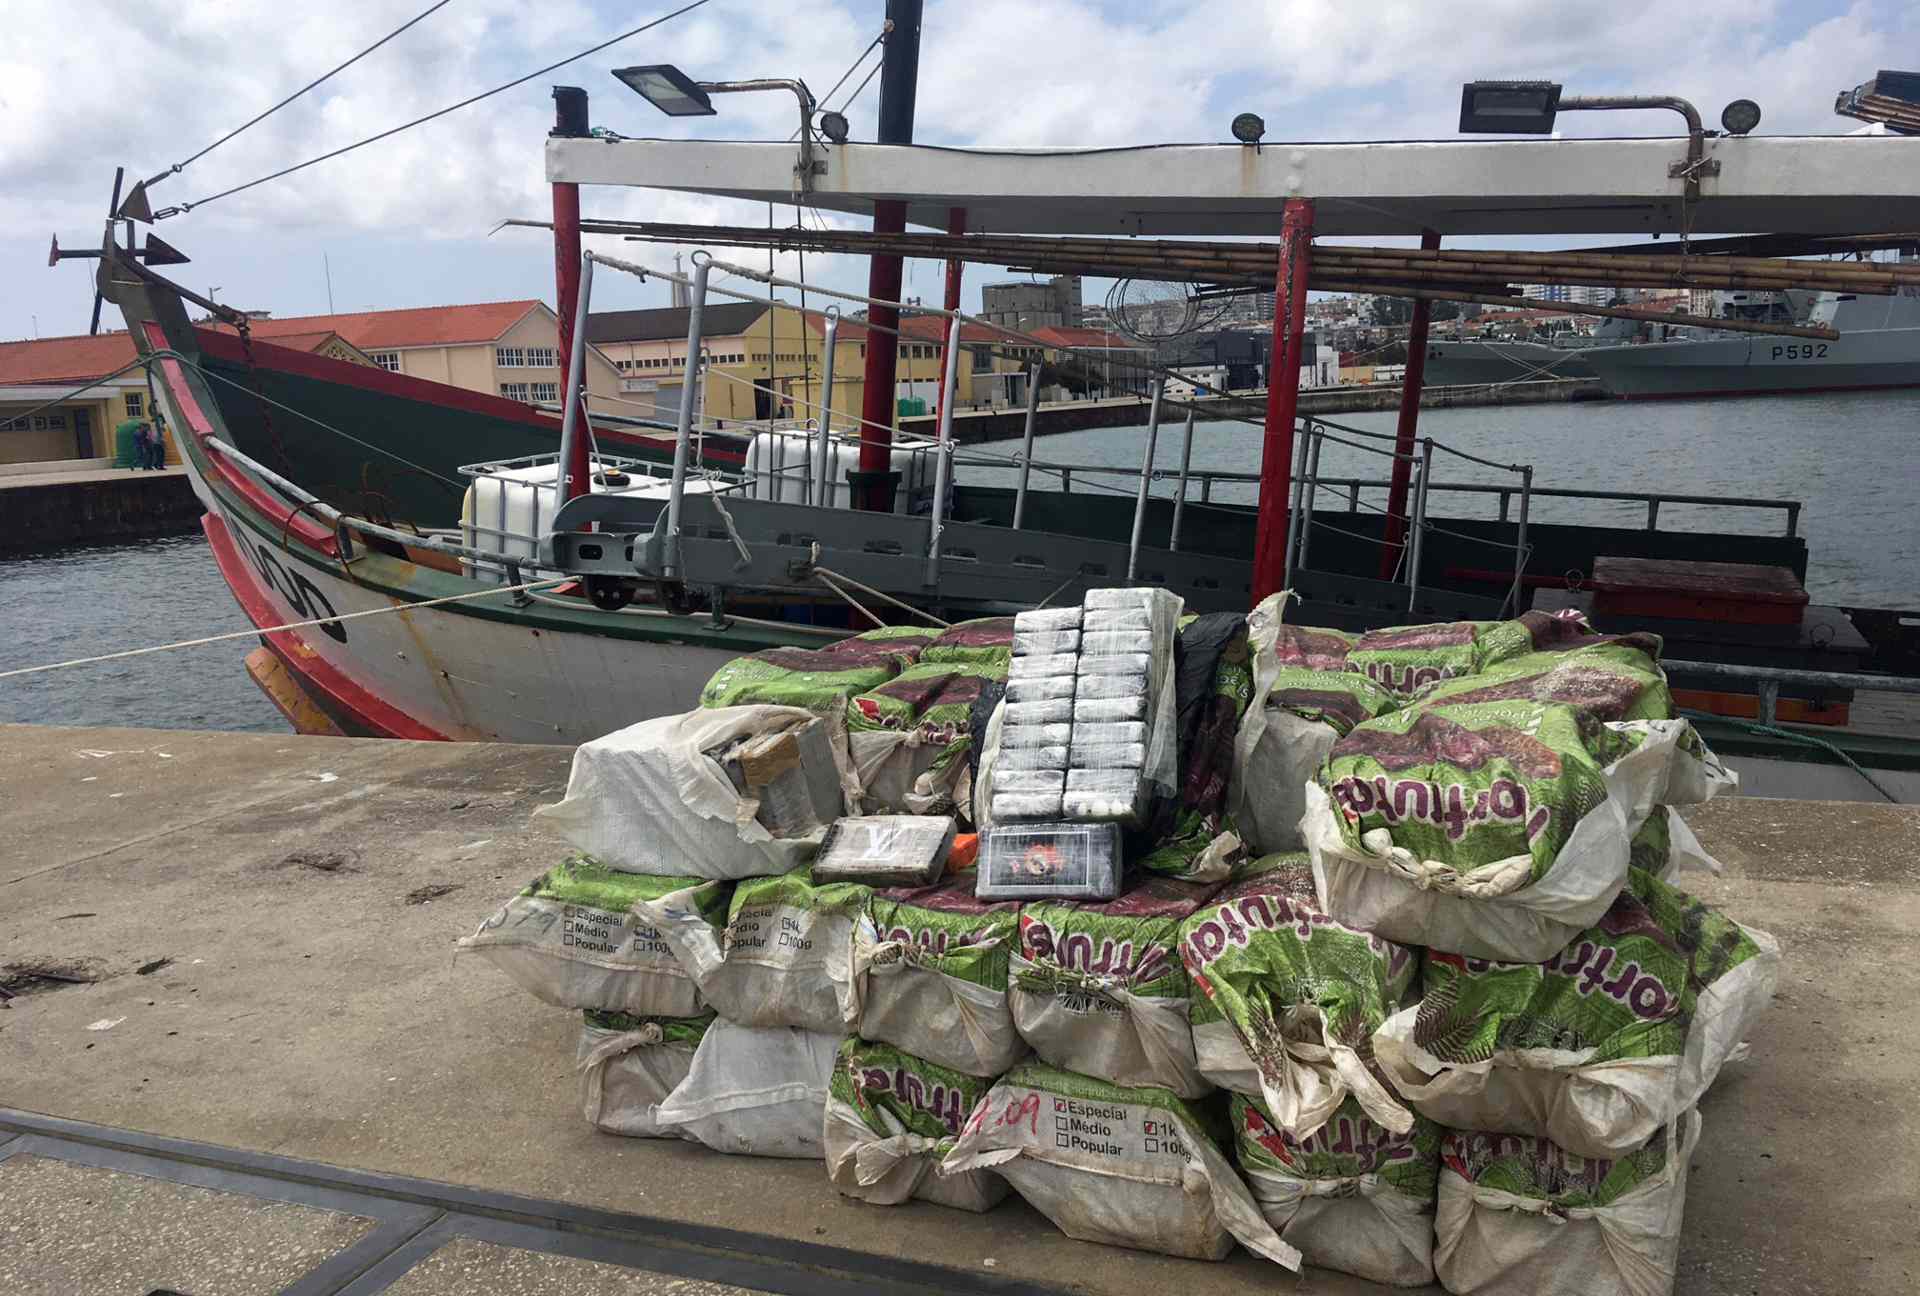 Encuentran cocaína en un buque que transporta cohetes en la Guayana francesa